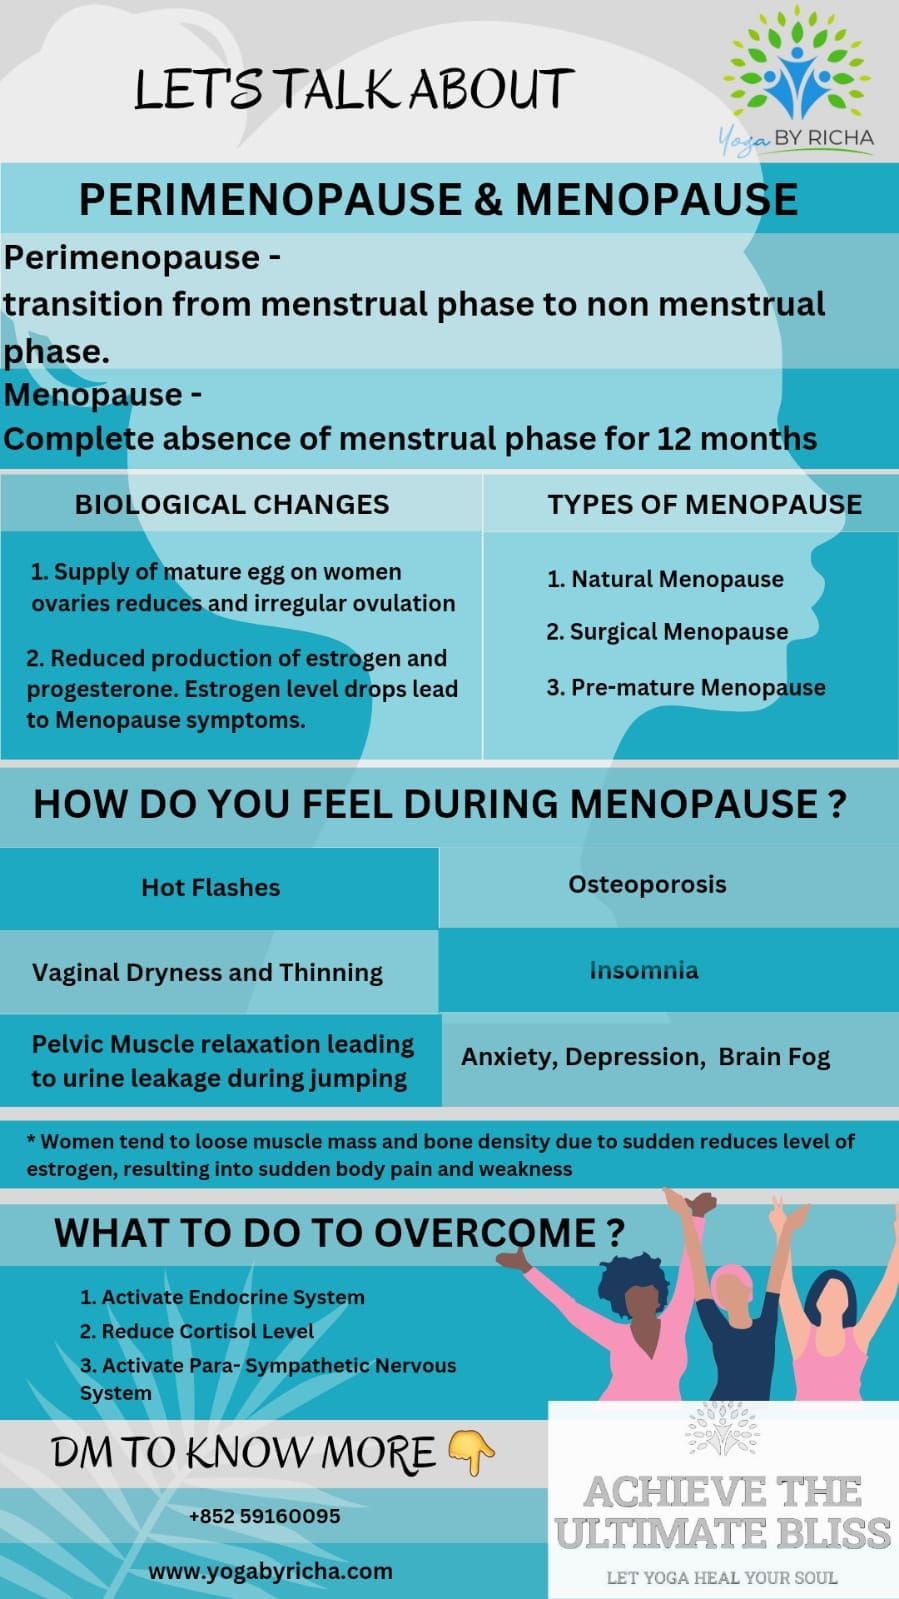 Menopause and Perimenopause Workshop